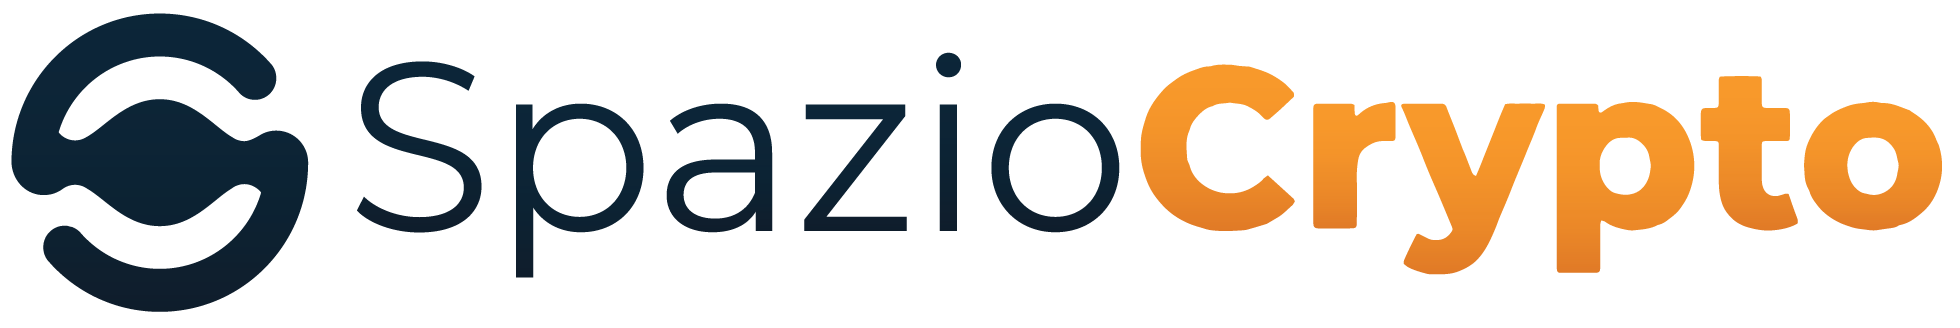 Spaziocrypto | The Italian Web3 Community icon